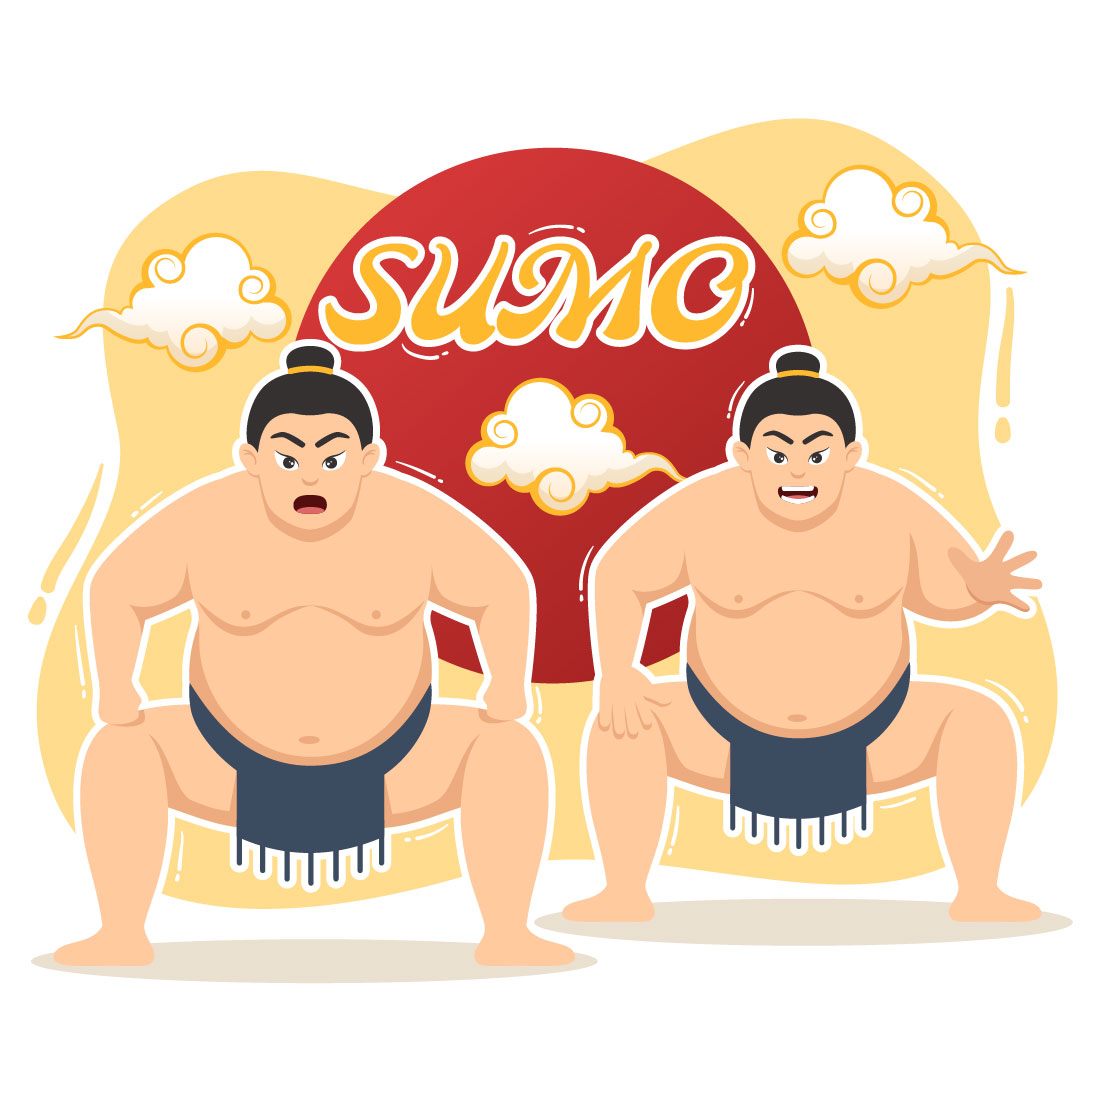 10 Sumo Wrestler Illustration cover image.